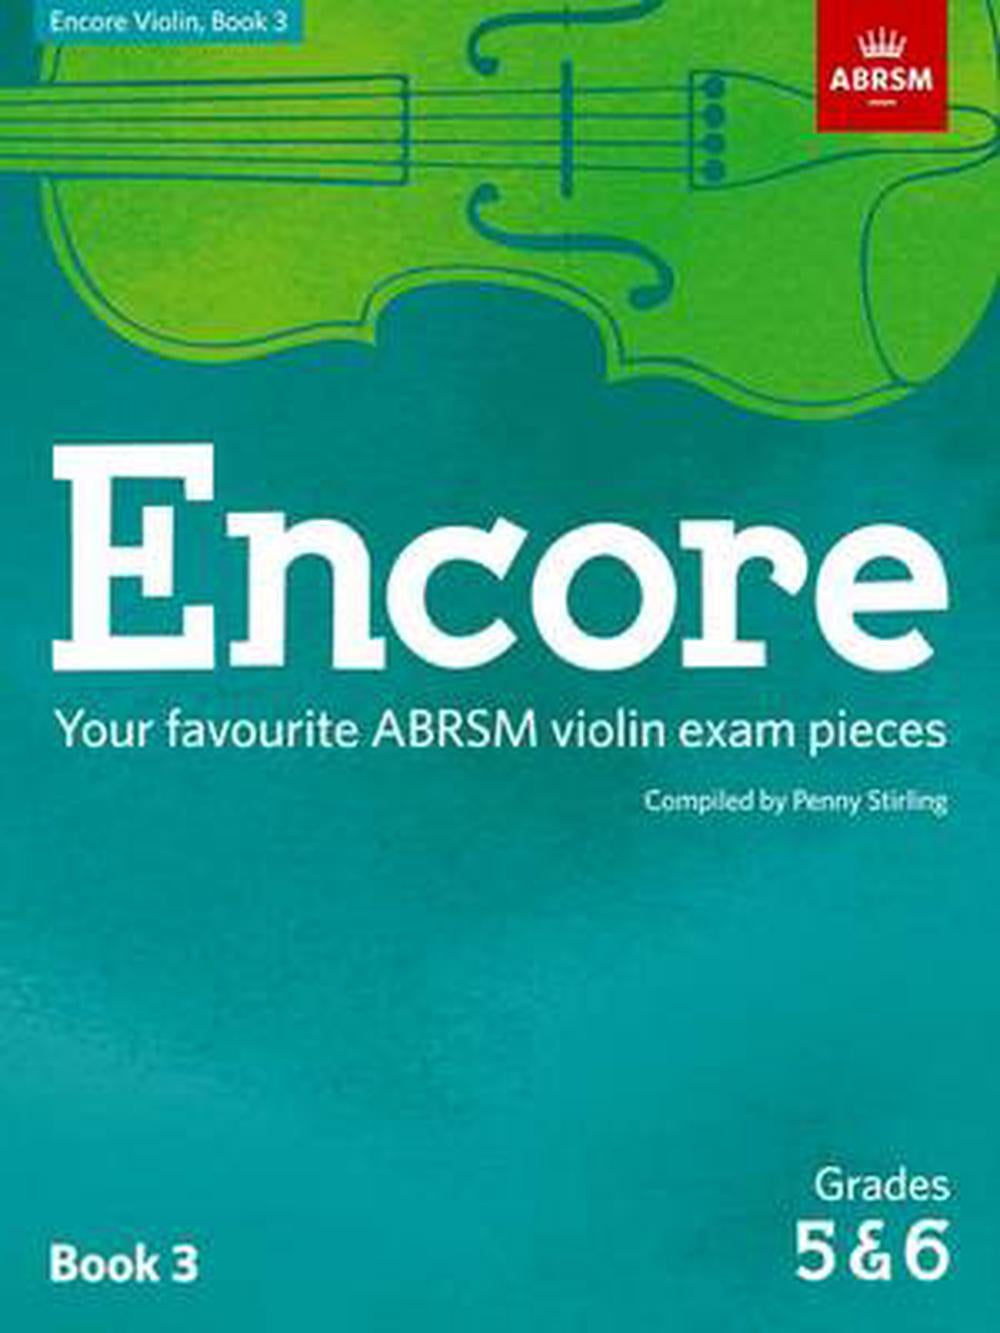 ABRSM Encore Violin Book 3 (G5-6)